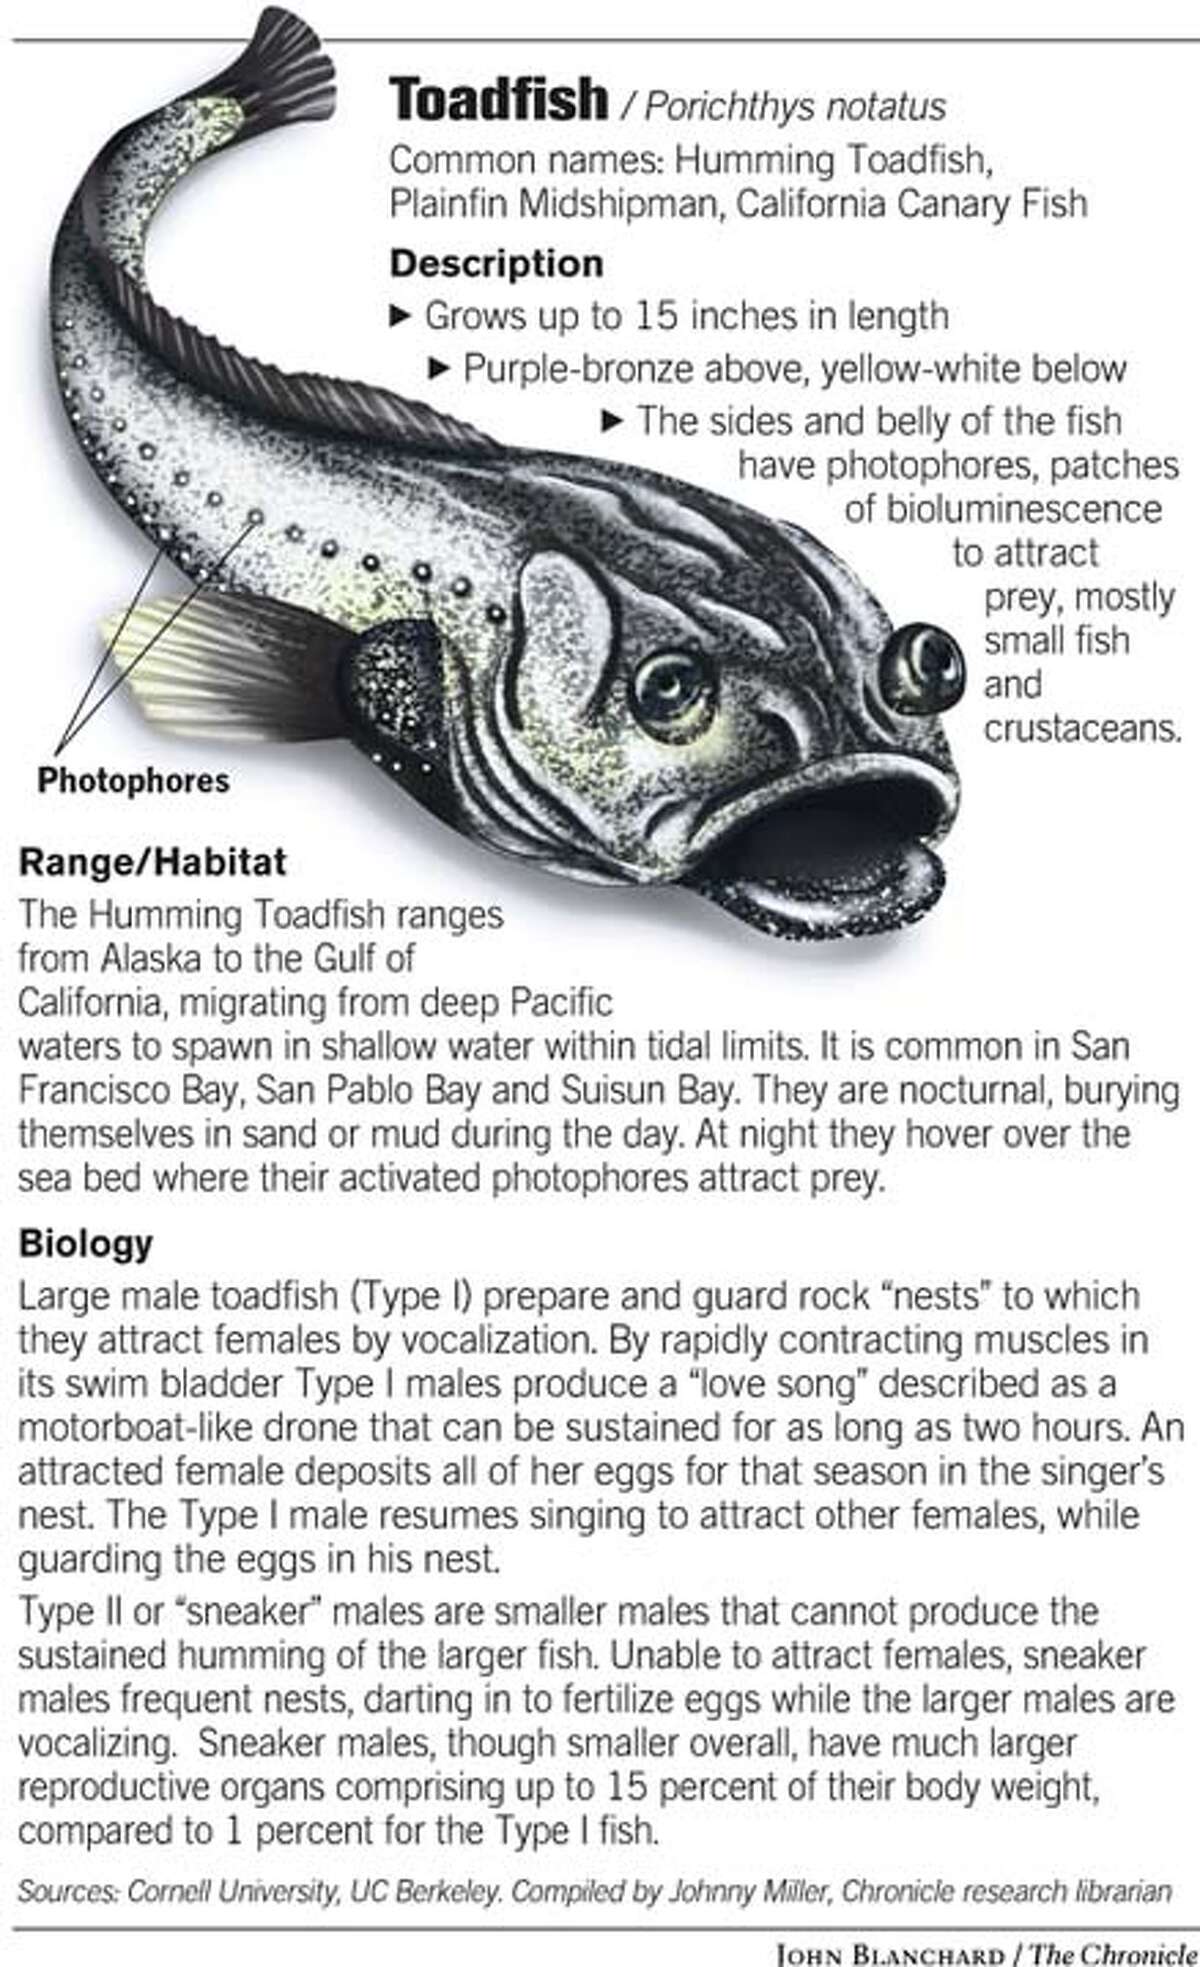 toadfish porichthys notatus sausalito plainfin